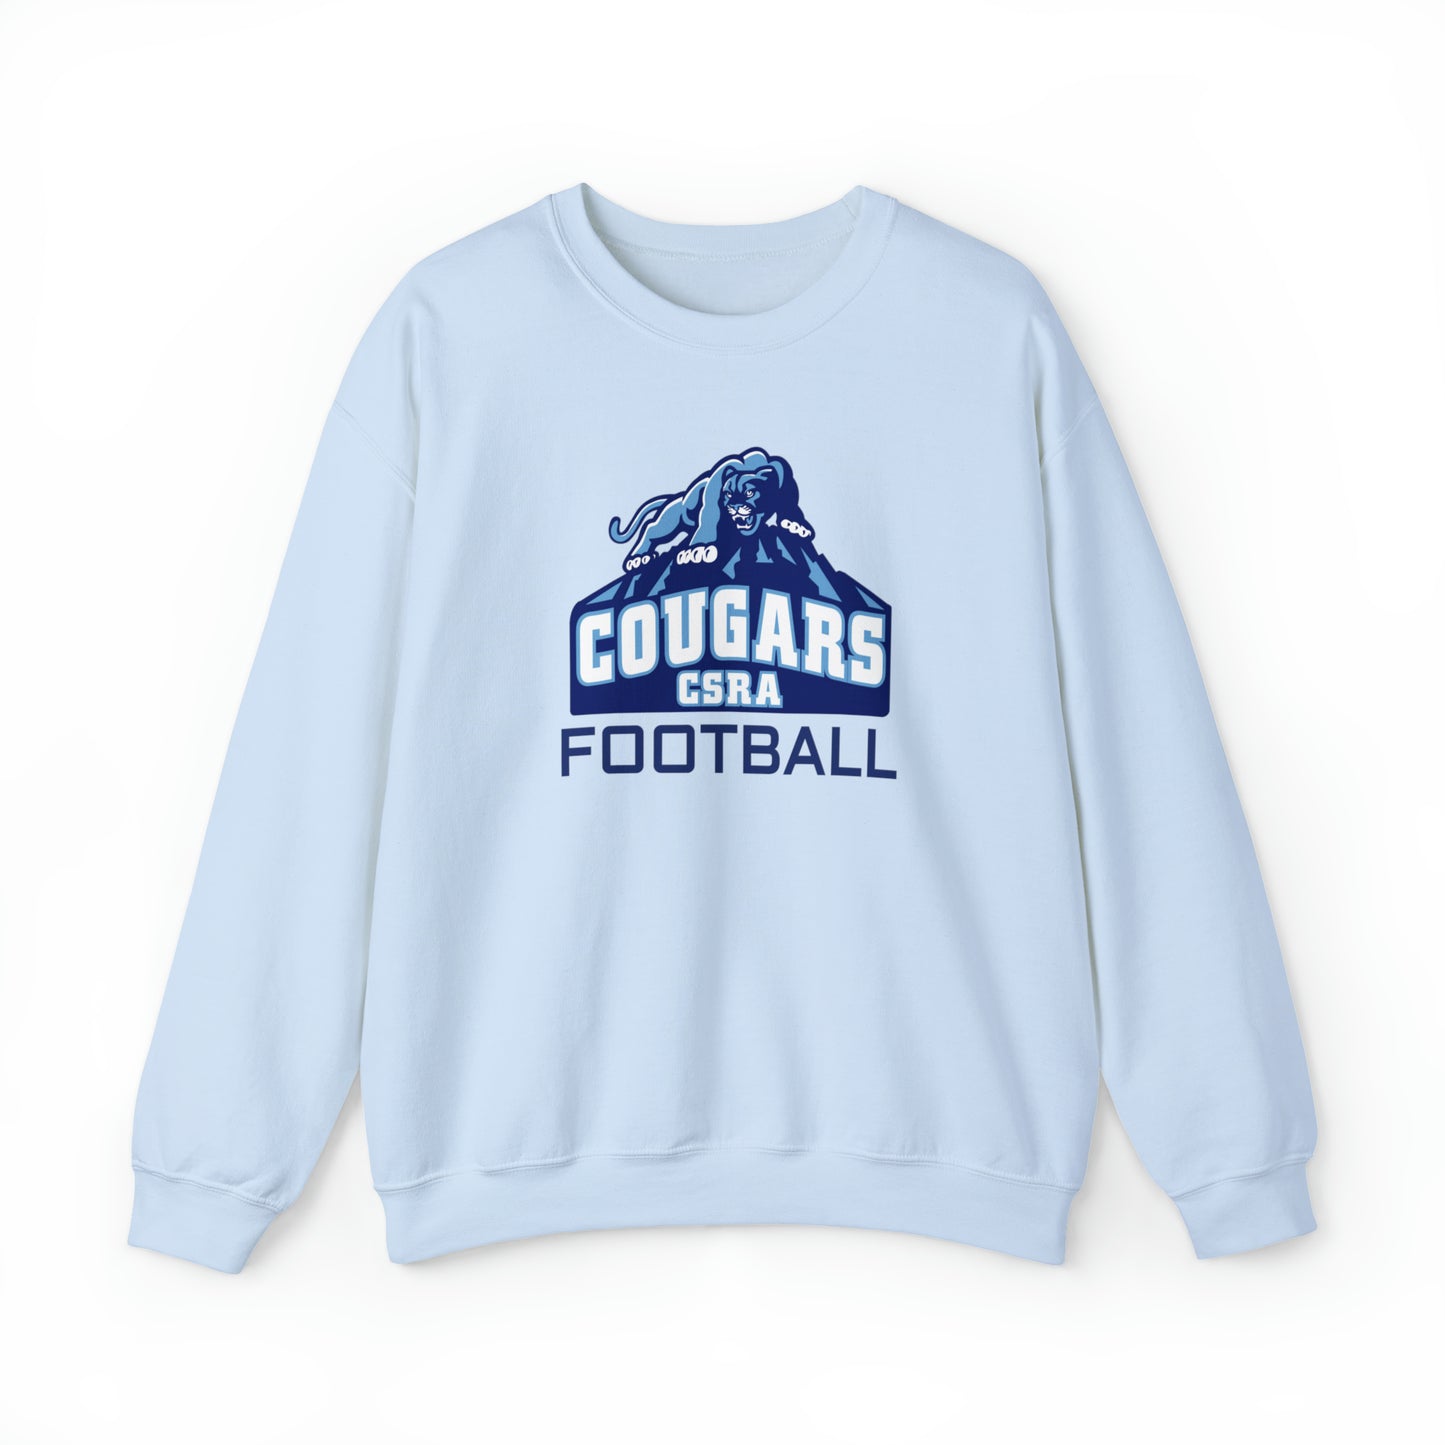 Cougars Football Unisex Crewneck Sweatshirt